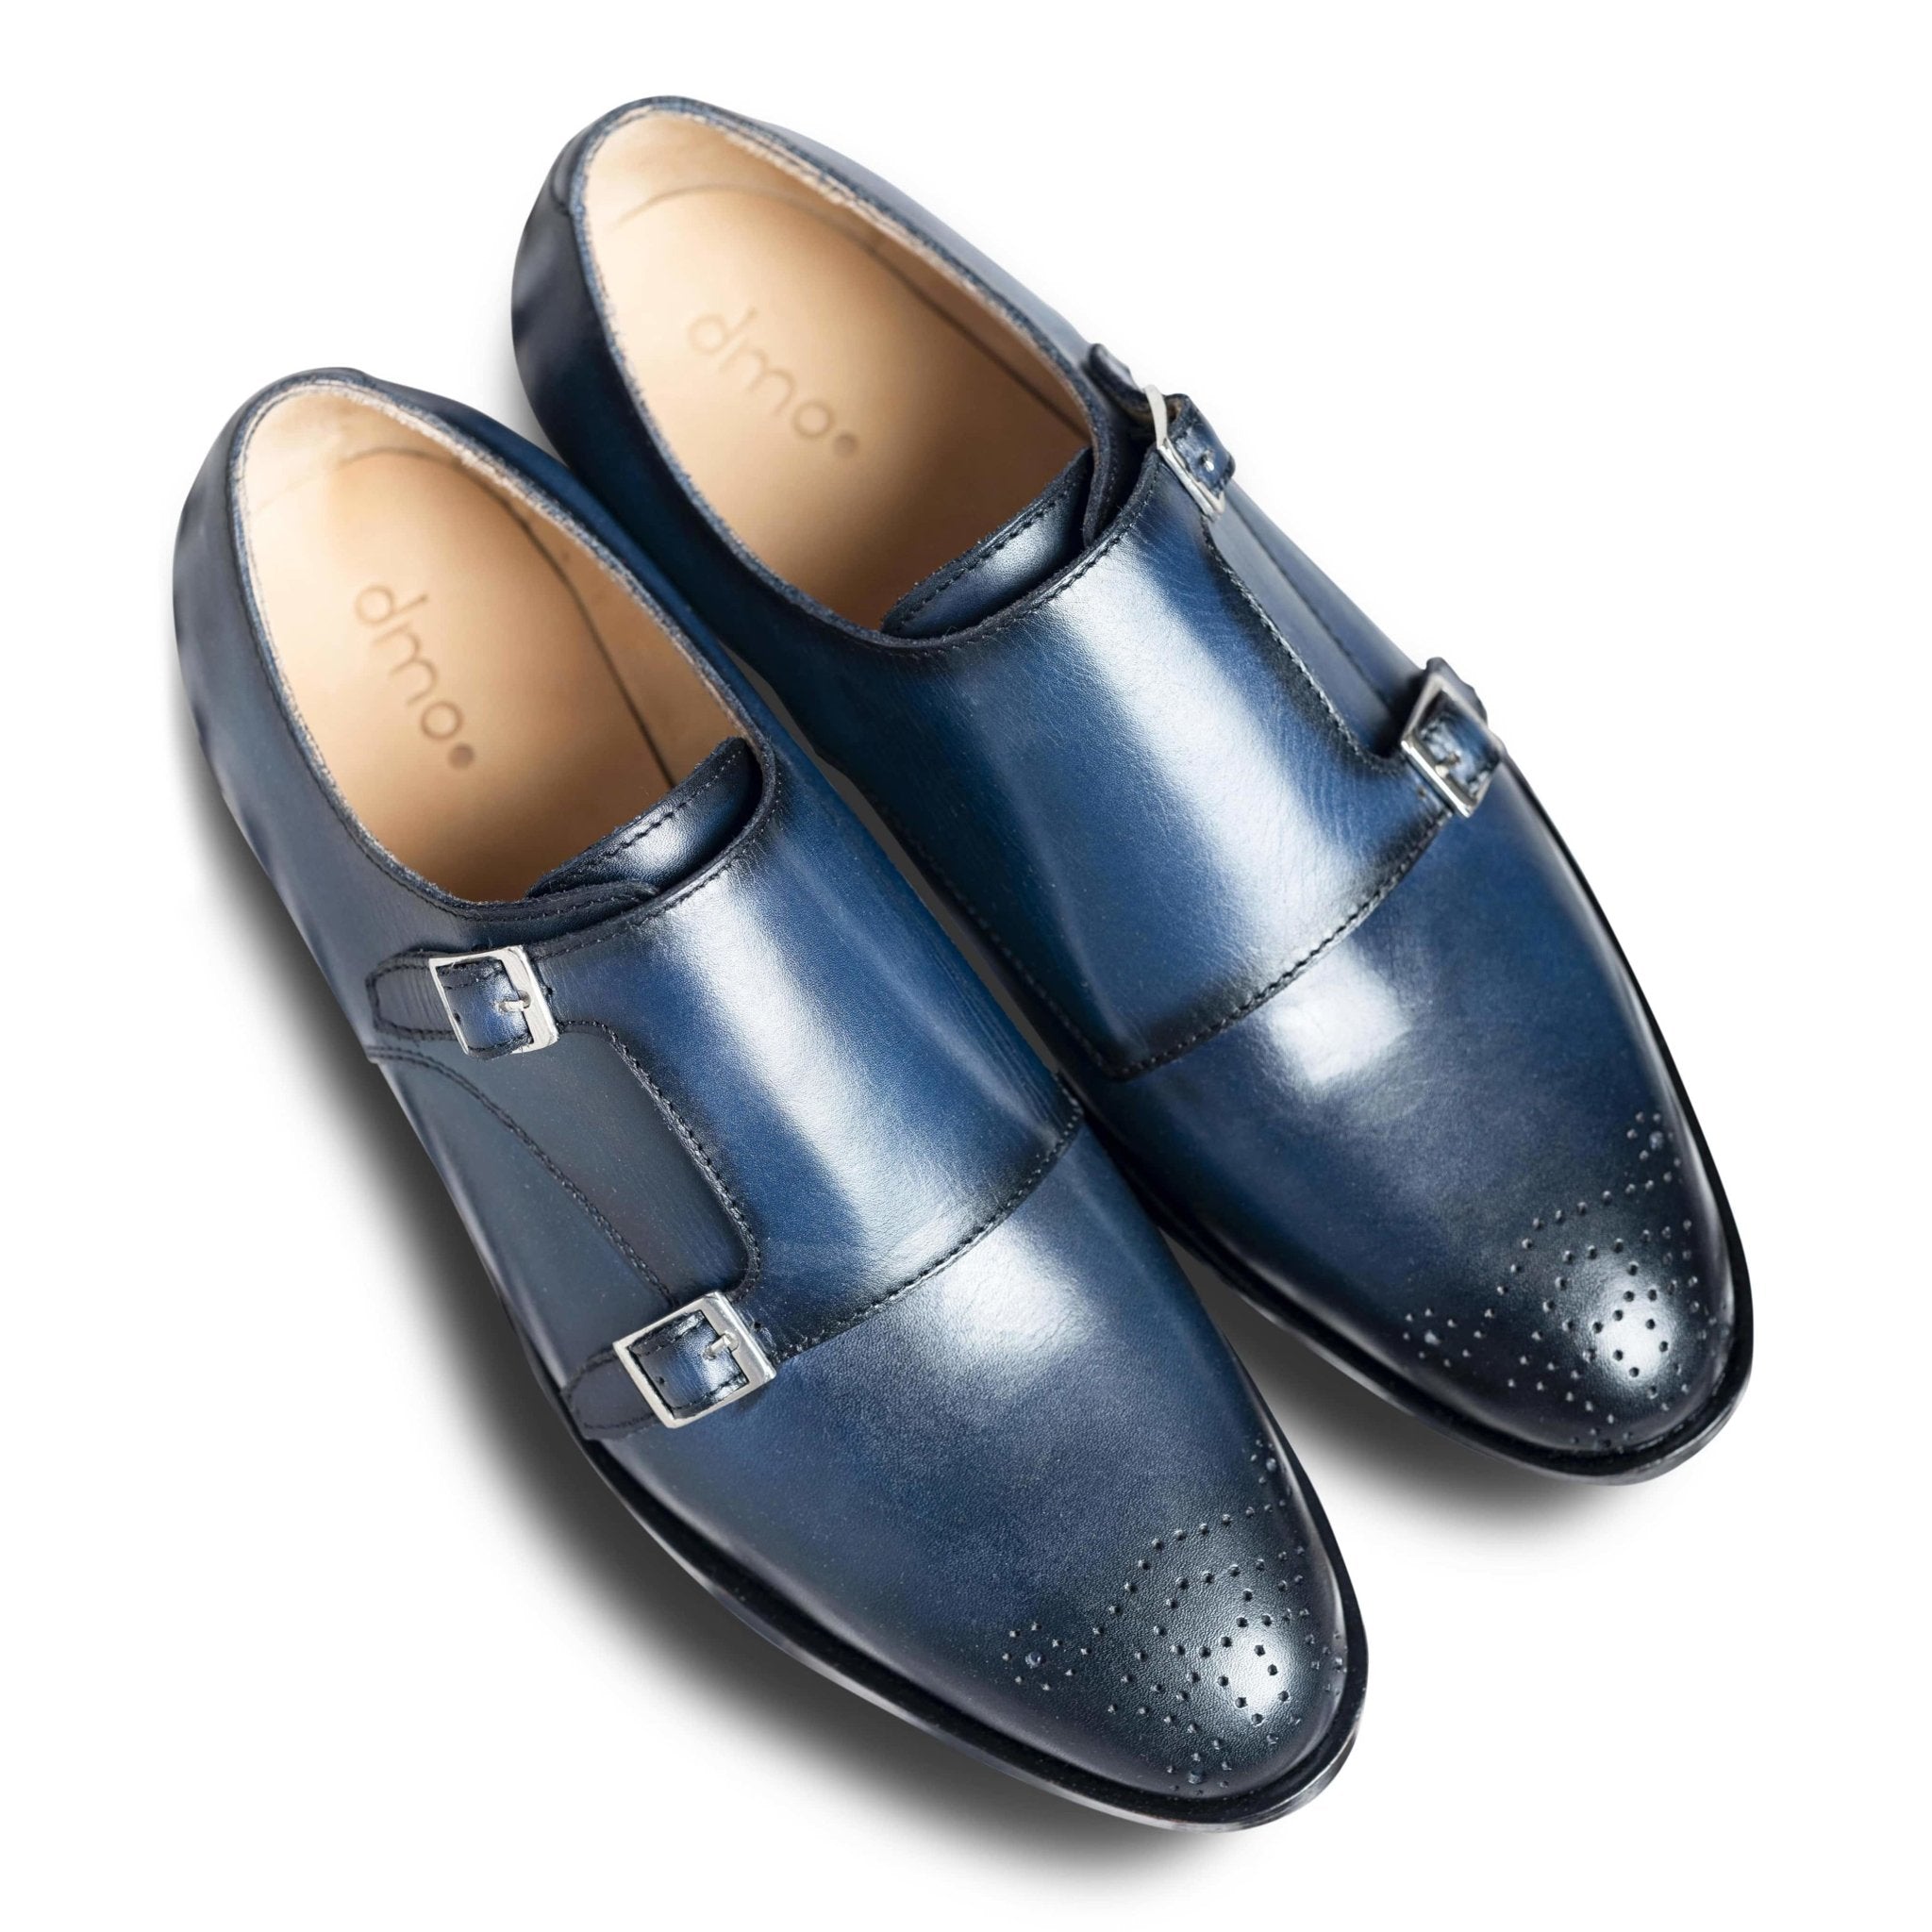 Azzurro - dmodot Shoes